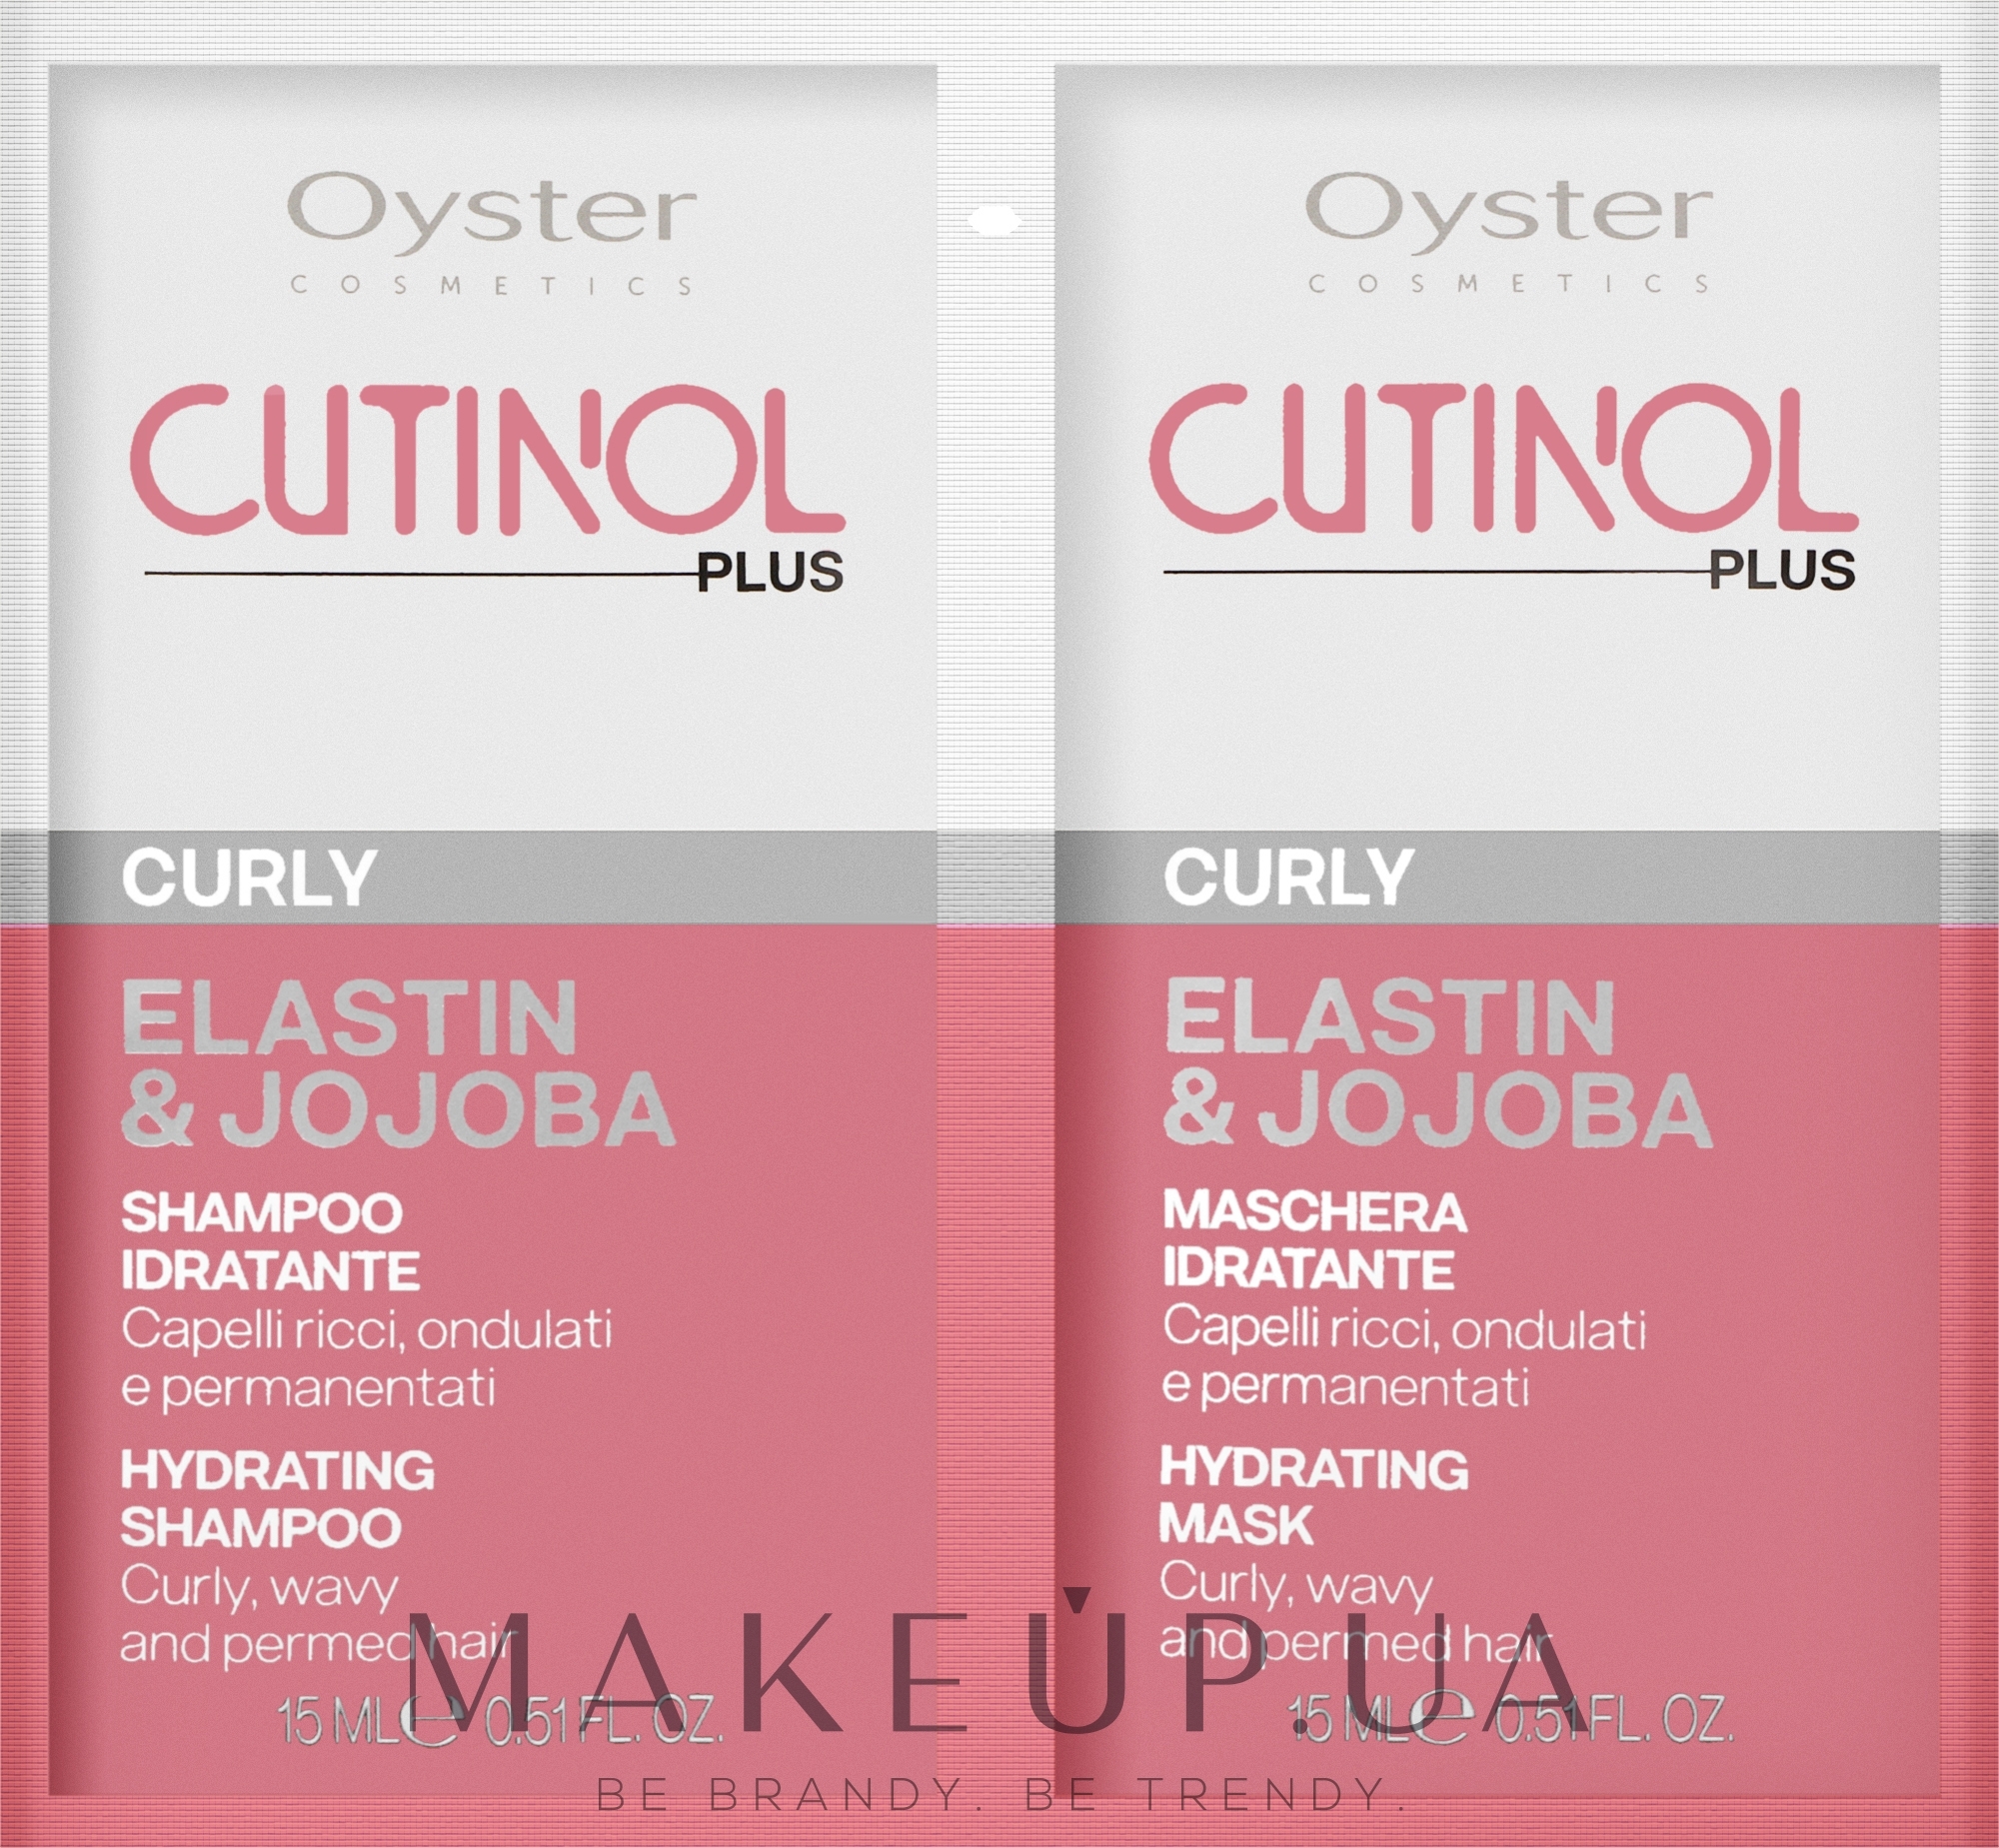 Набор пробников для волос - Oyster Cosmetics Cutinol Plus Curly (mask/15ml + sh/15ml) — фото 2x15ml